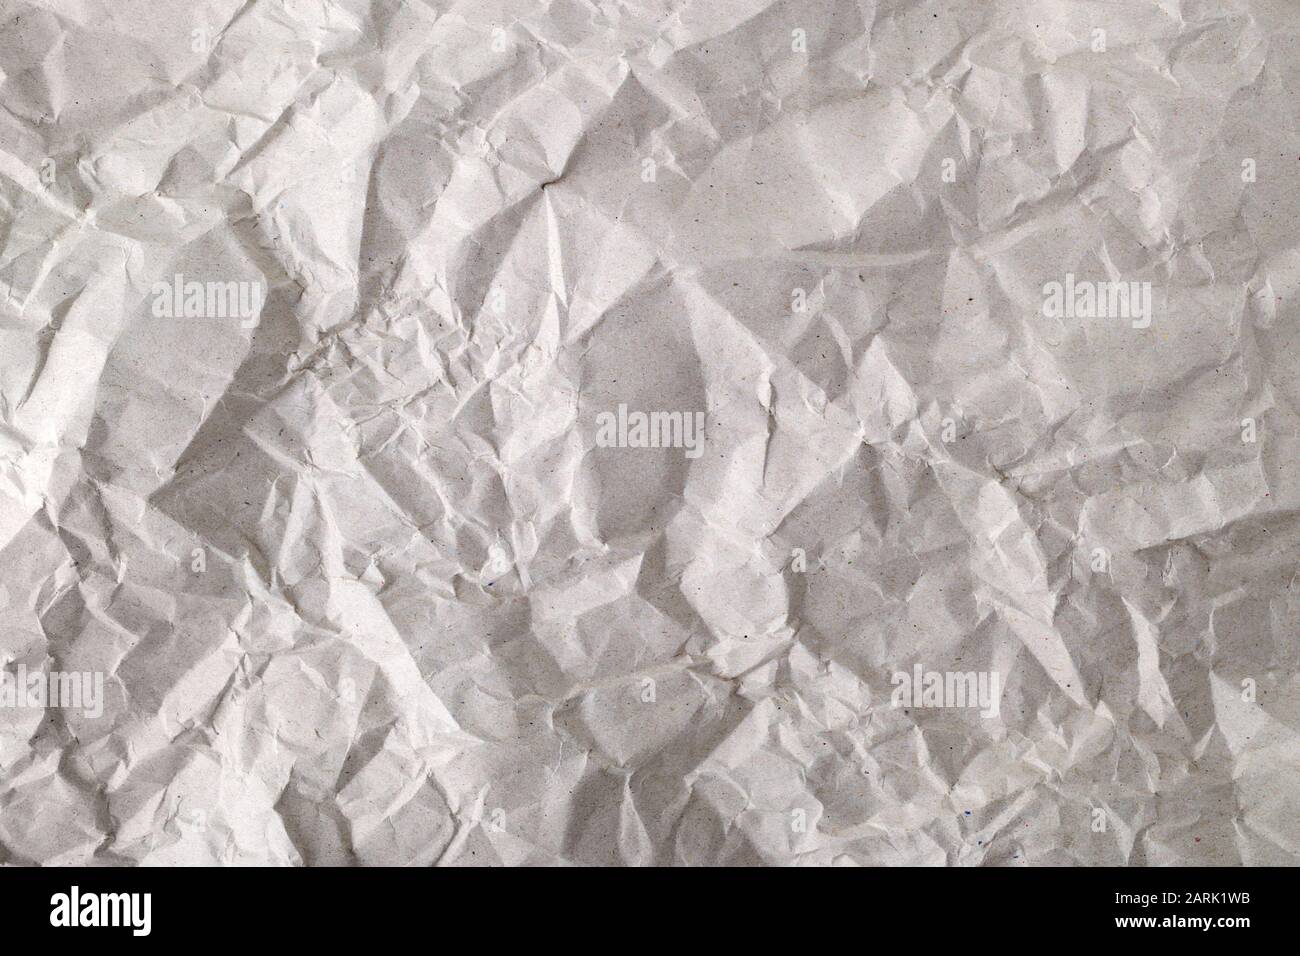 Textur des zerknitterten, grauen Verpackungspapiers. Hintergrund des zerknitteten Packpapiers. Leeres graues zerknittertes Papier. Kopierbereich. Draufsicht. Stockfoto